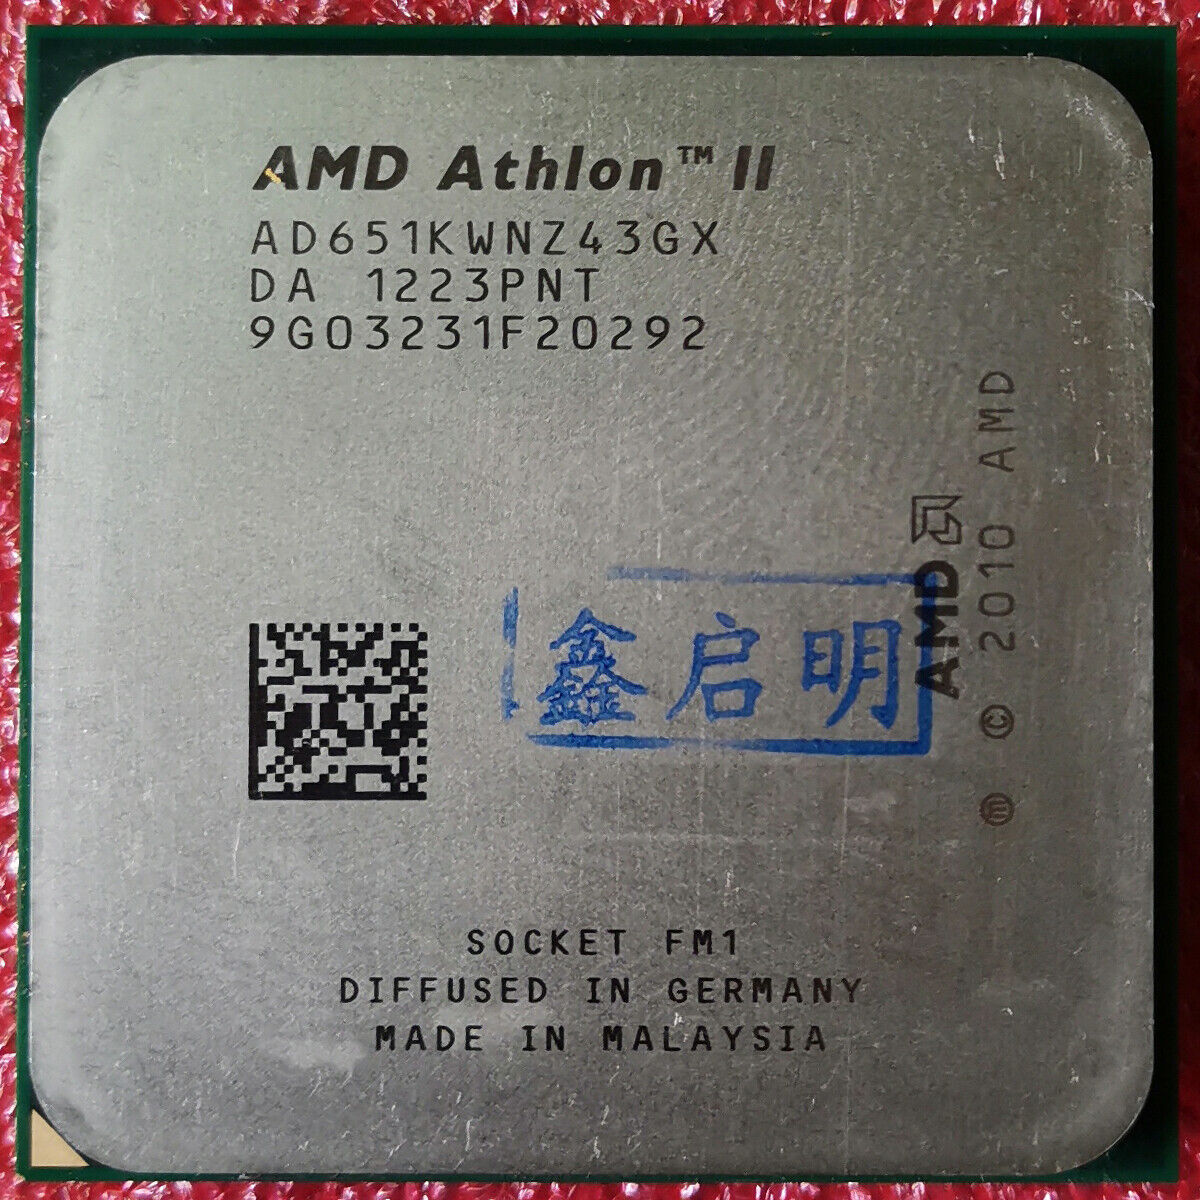 AMD Athlon II X4 651K CPU AD651KWNZ43GX 3GHz Quad Core Socket FM1 Processor